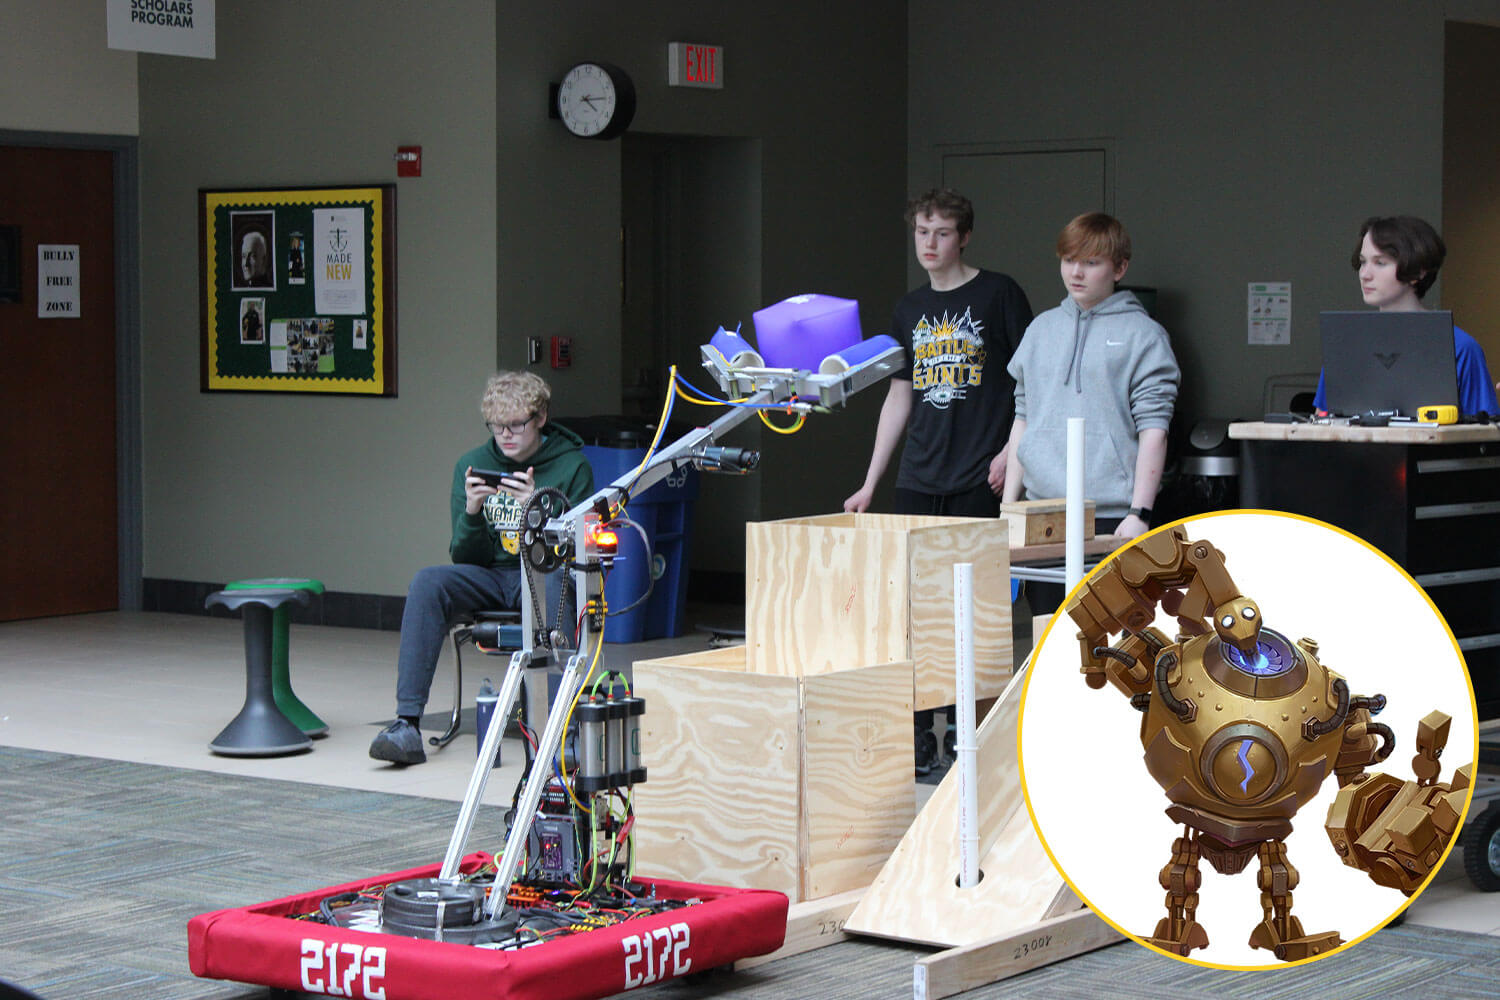 the st. edward high school robotics team working on their robot nicknamed Blitz